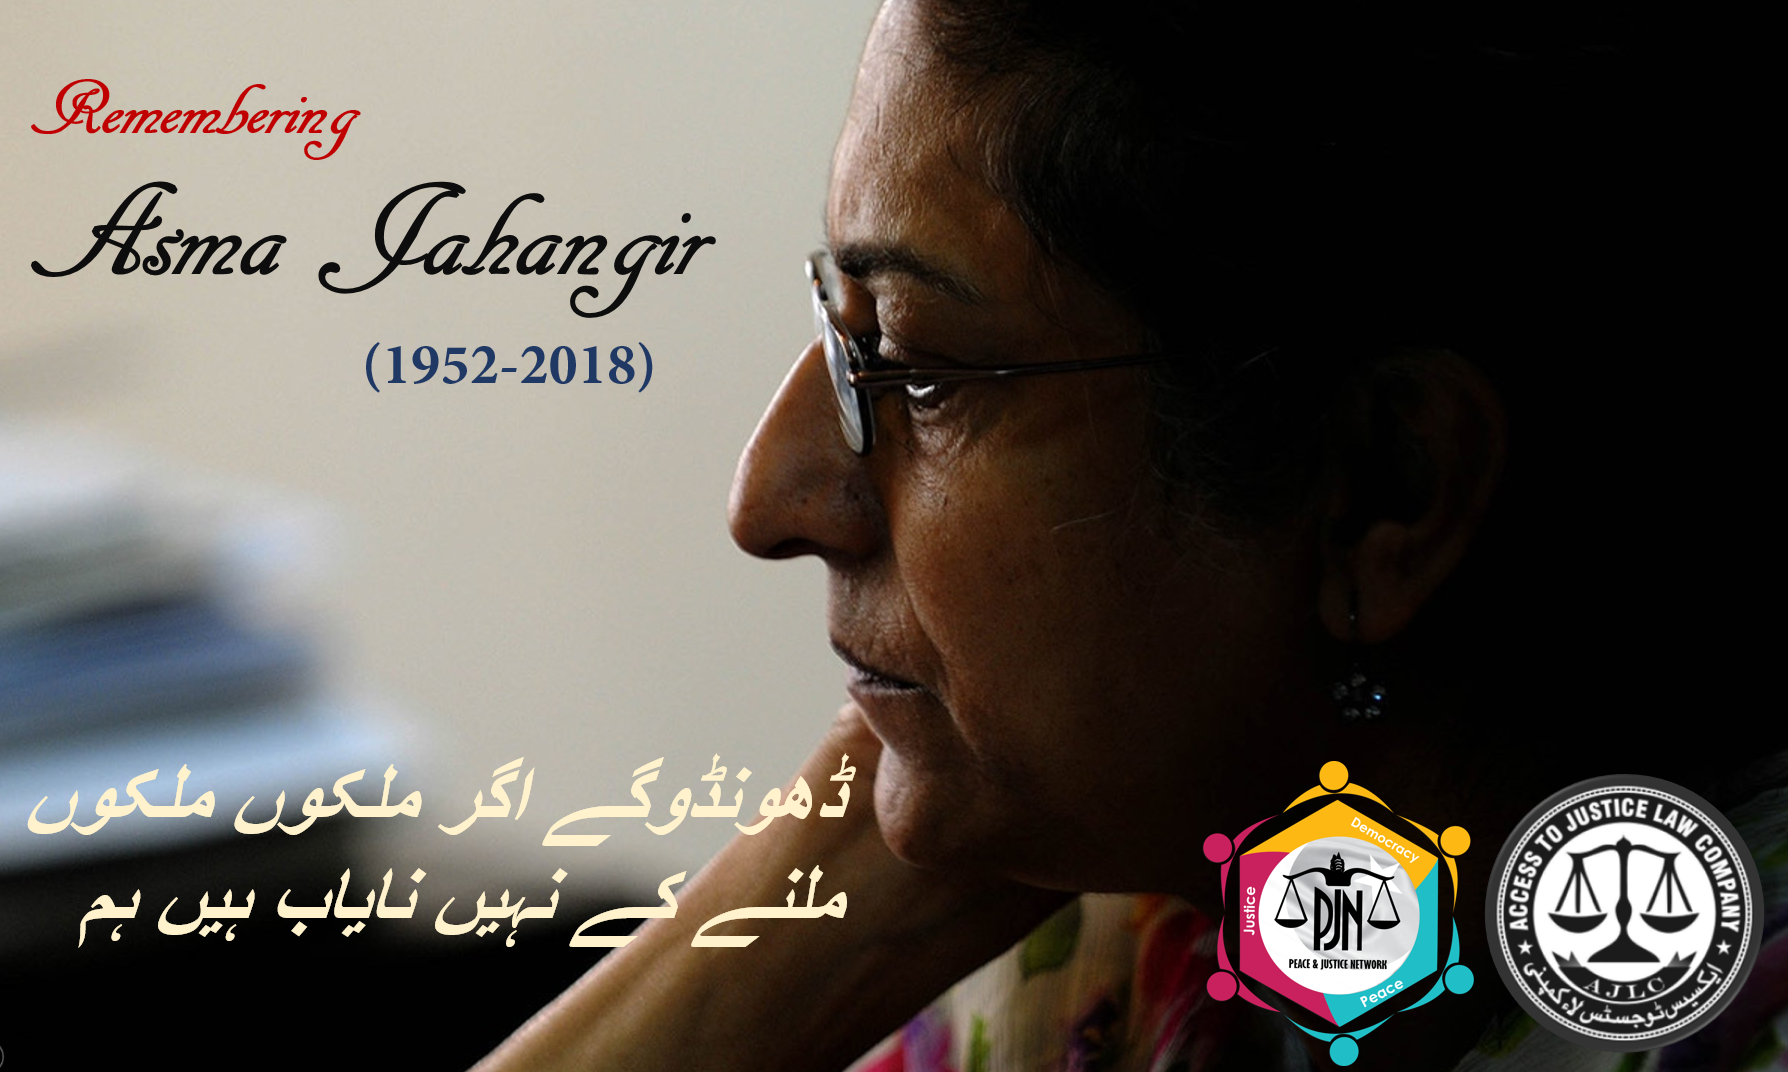 Remembering Asma Jahangir